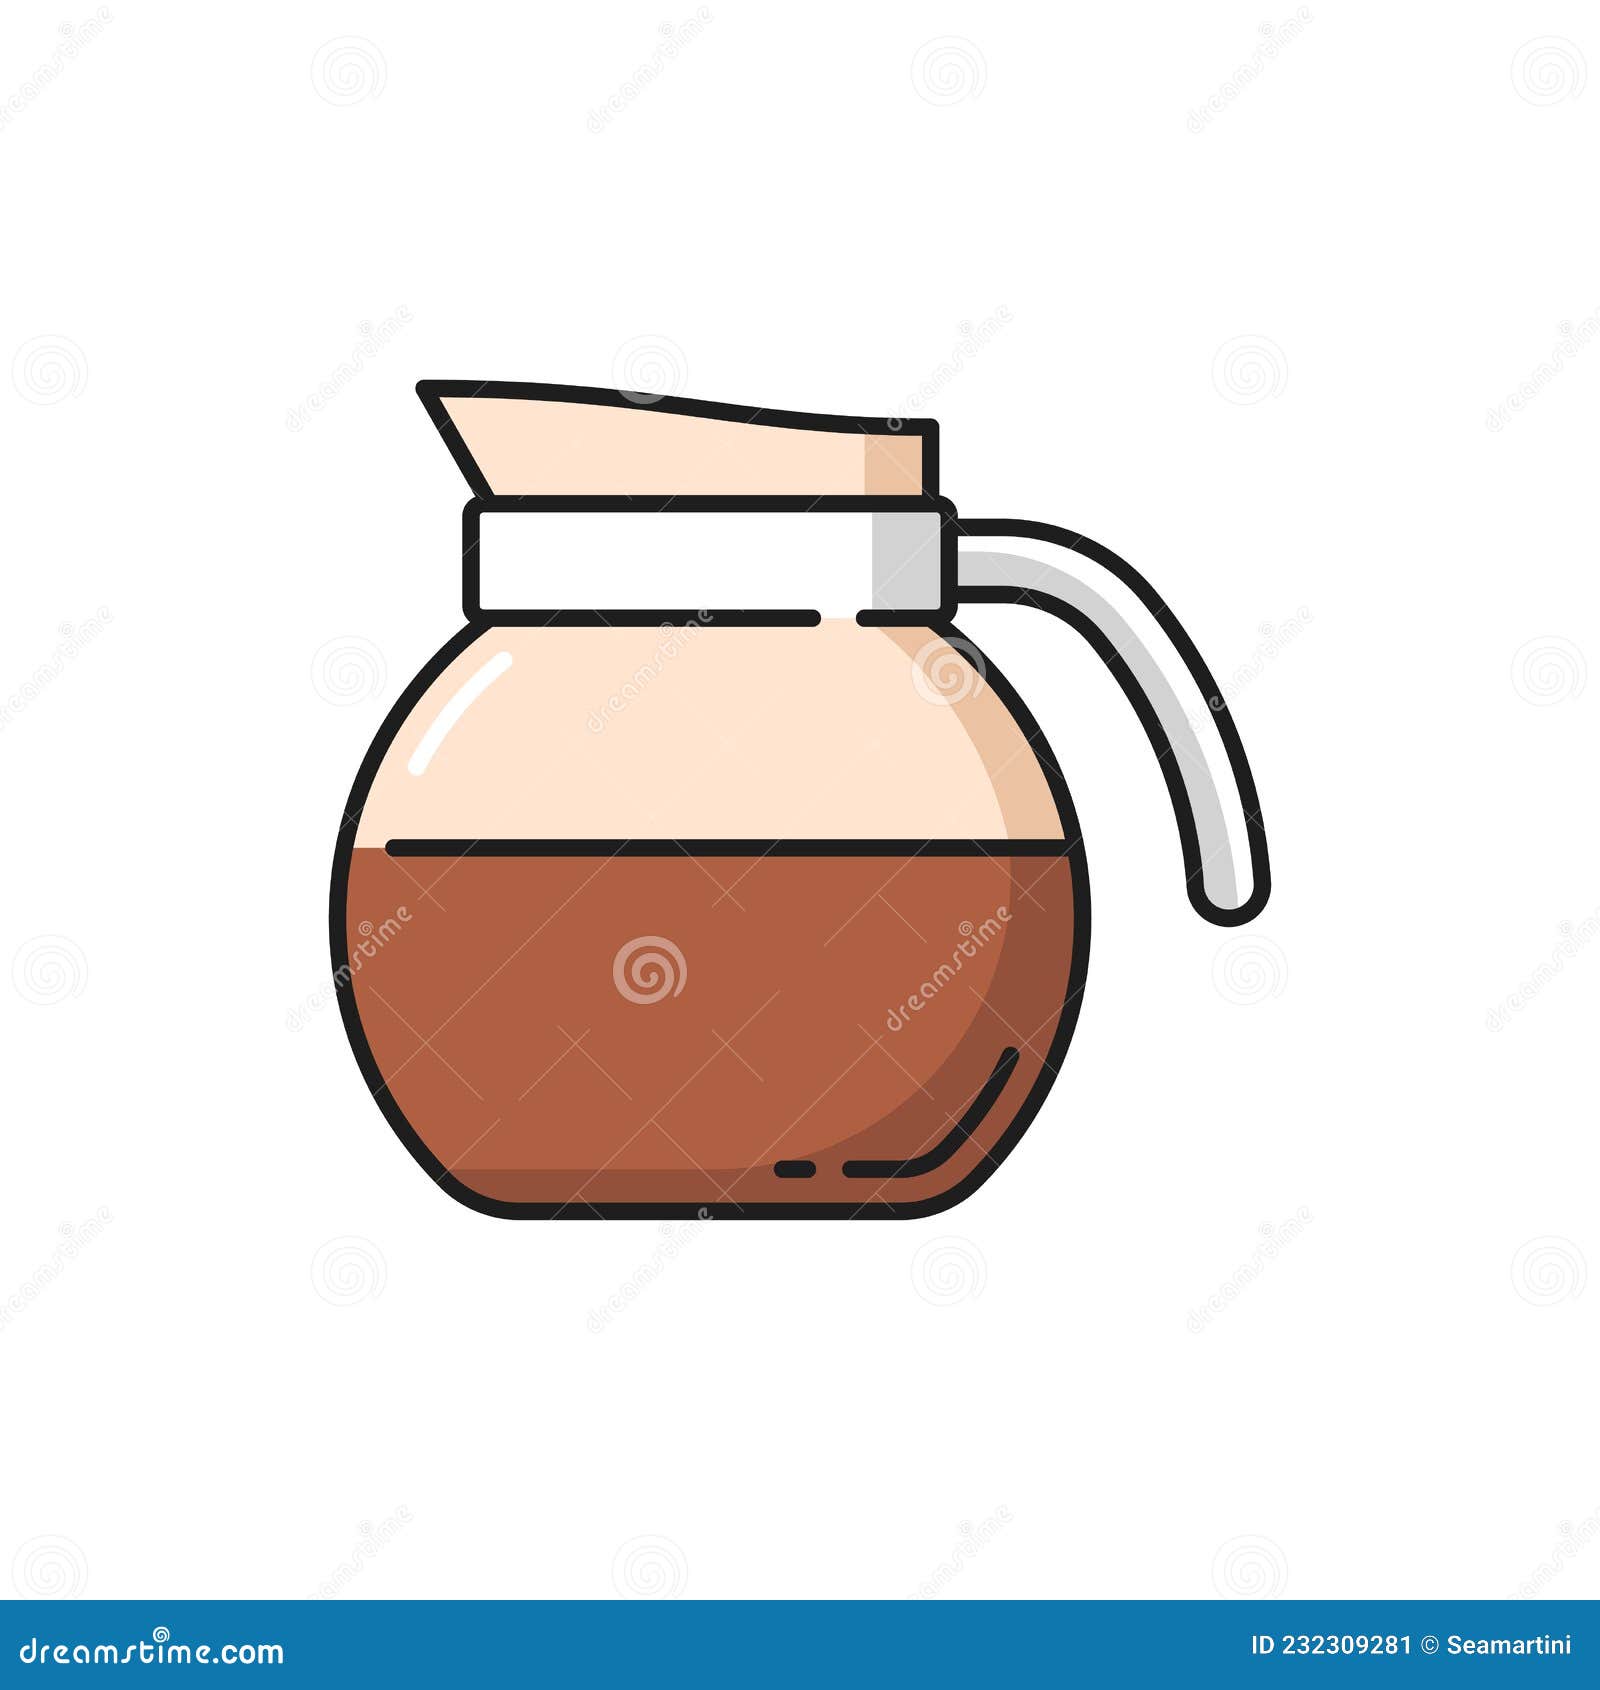 https://thumbs.dreamstime.com/z/glass-jug-pitcher-fresh-milk-isolated-line-icon-kettle-coffee-tea-flat-vector-coffeeware-item-teapot-kitchenware-object-232309281.jpg